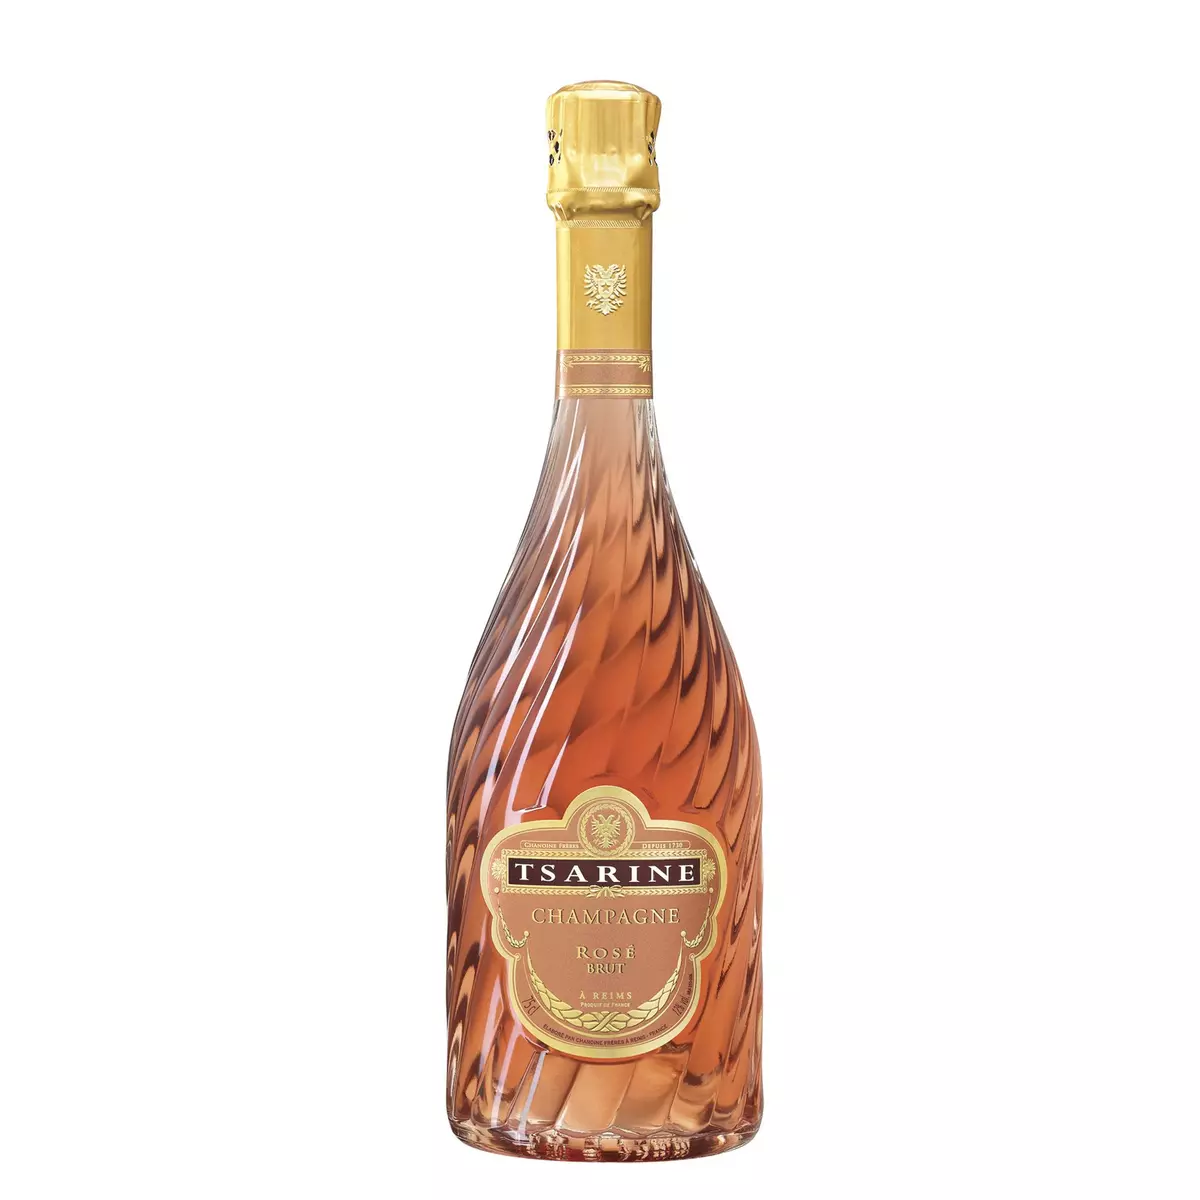 TSARINE AOP Champagne brut rosé 75cl